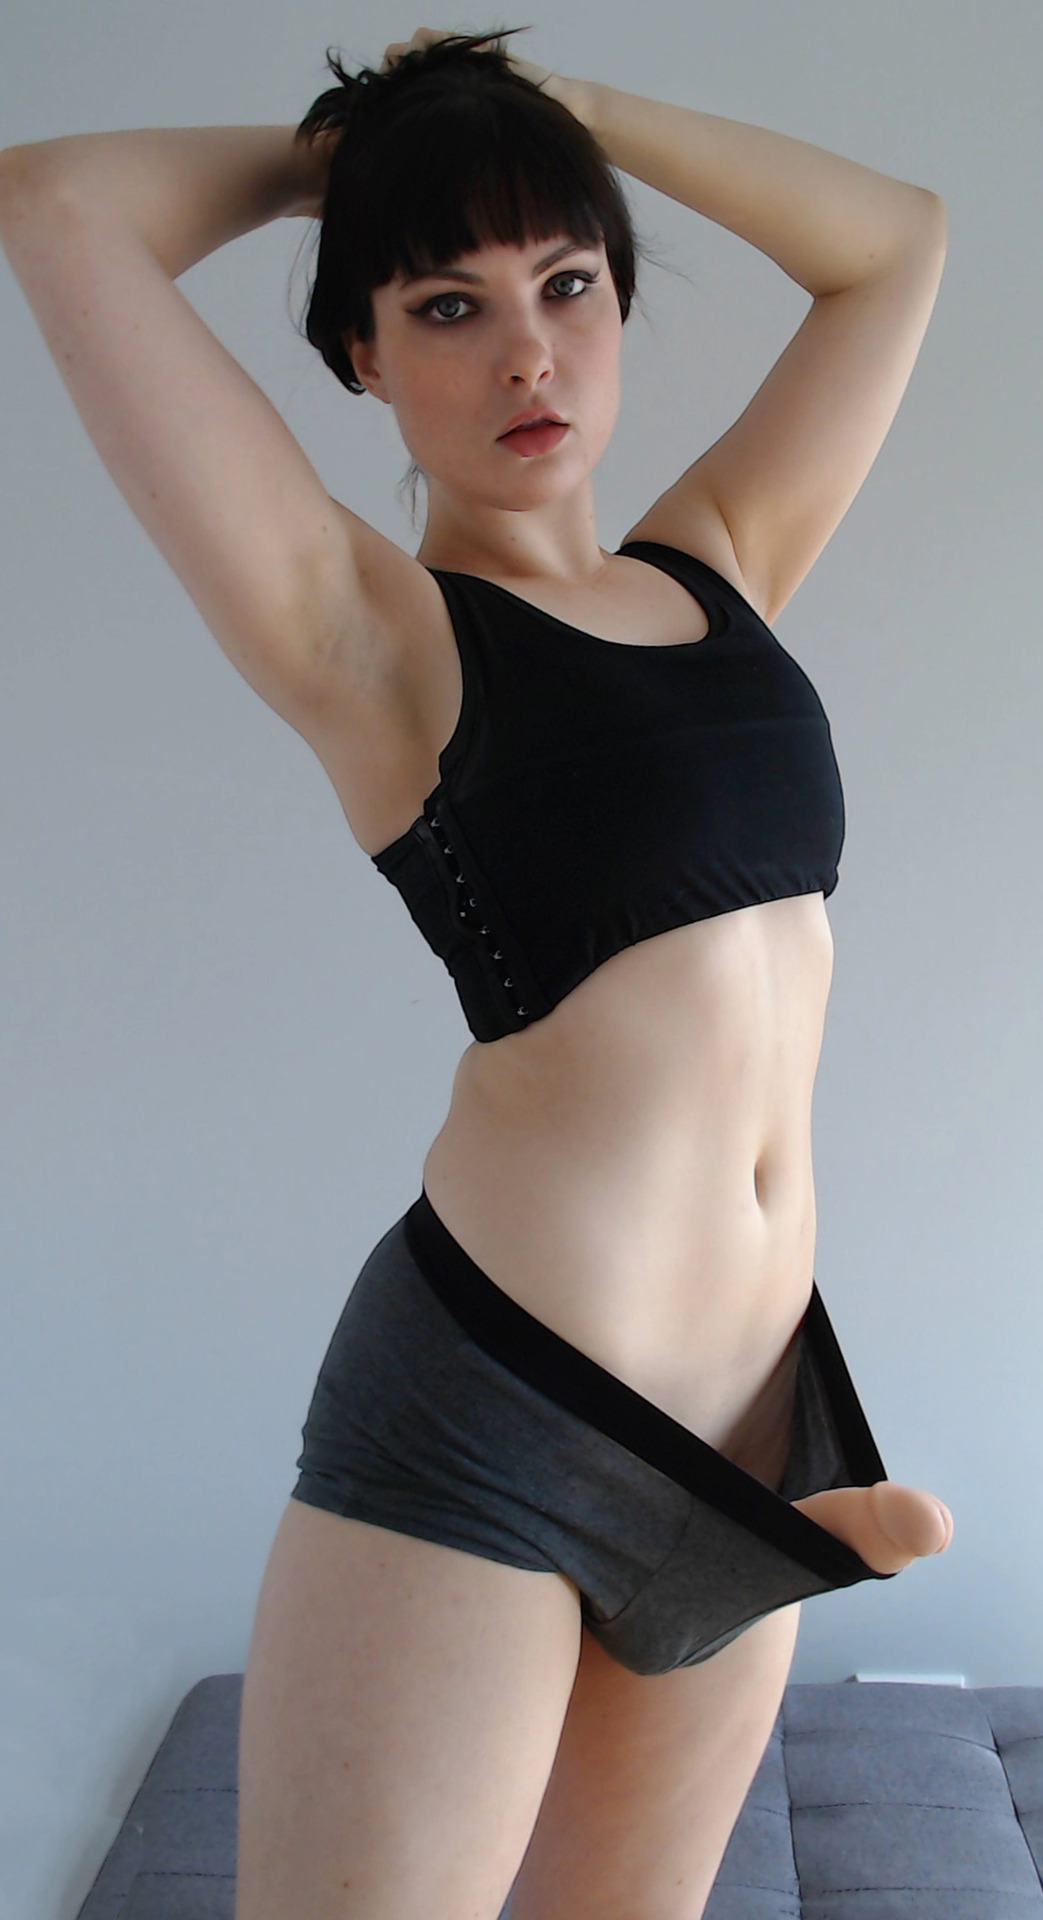 gianna michaels tumblr getting fucked bbc #adorable #alyssamiller #belly #cuteteen #goddamnedadorable #hot #hotteen #nicebody #nicetits #nn #nnteen #posing #sexy #shorts #tightbody #youngteen